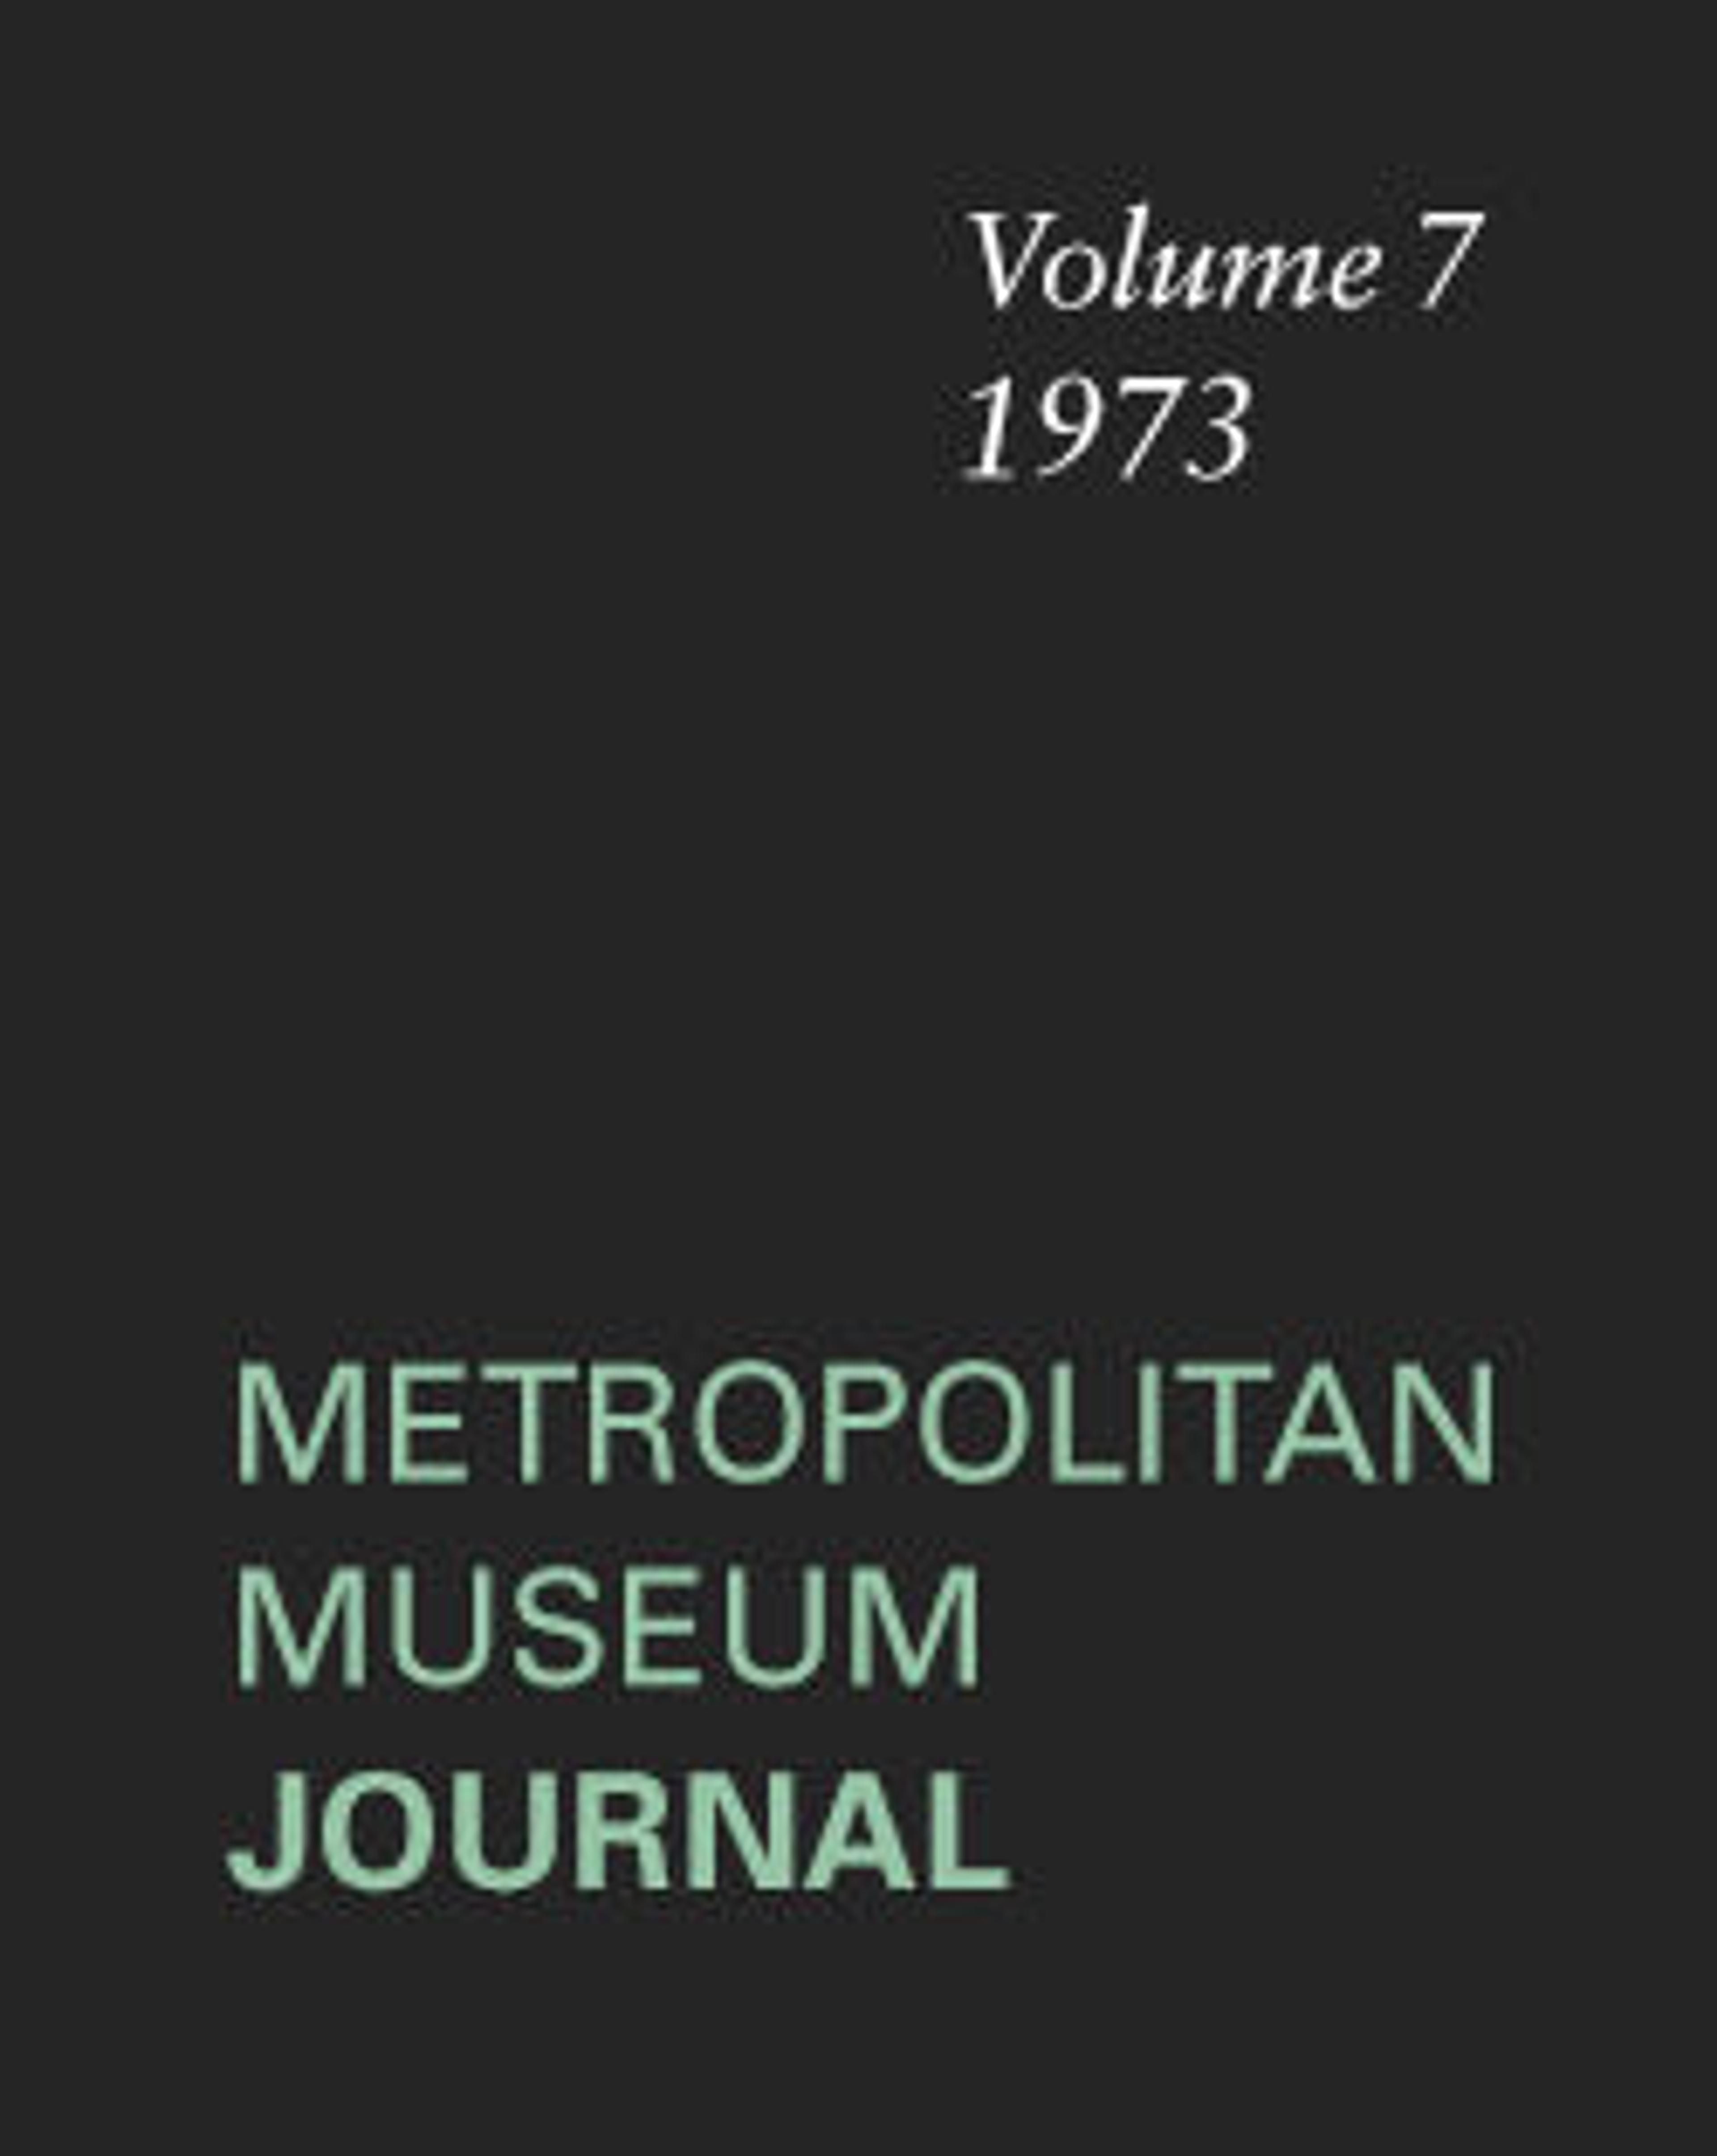 The Metropolitan Museum Journal, v. 7 (1973)